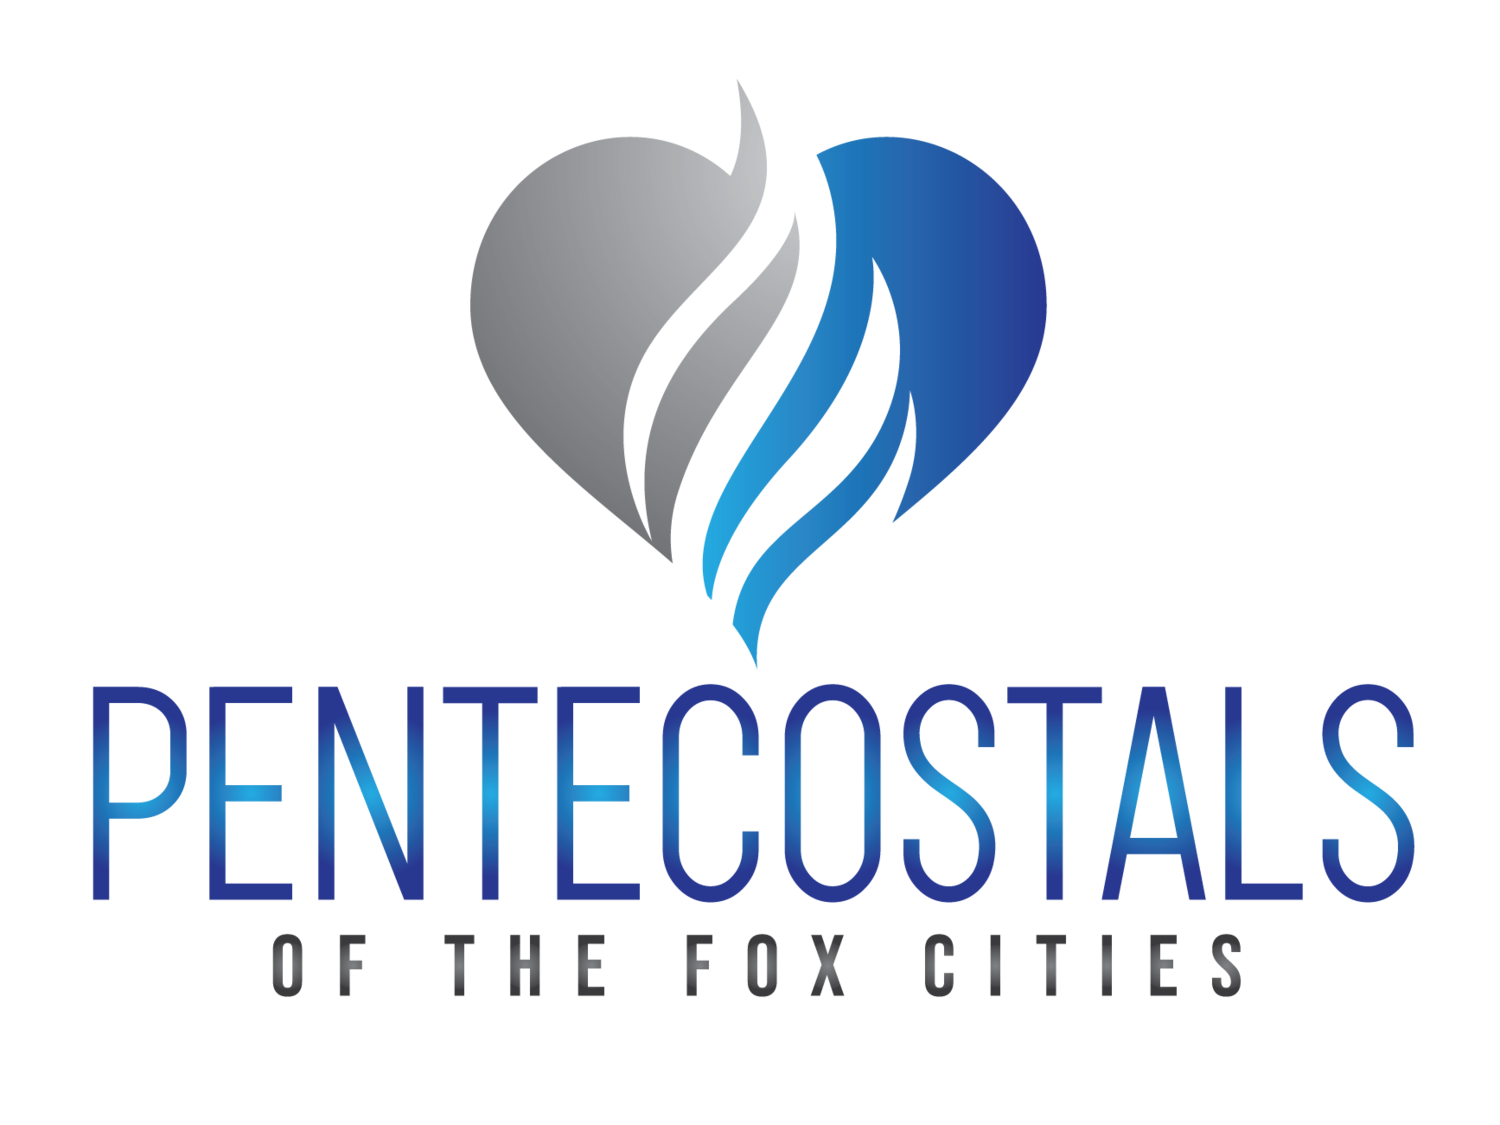 Pentecostals of the Fox Cities